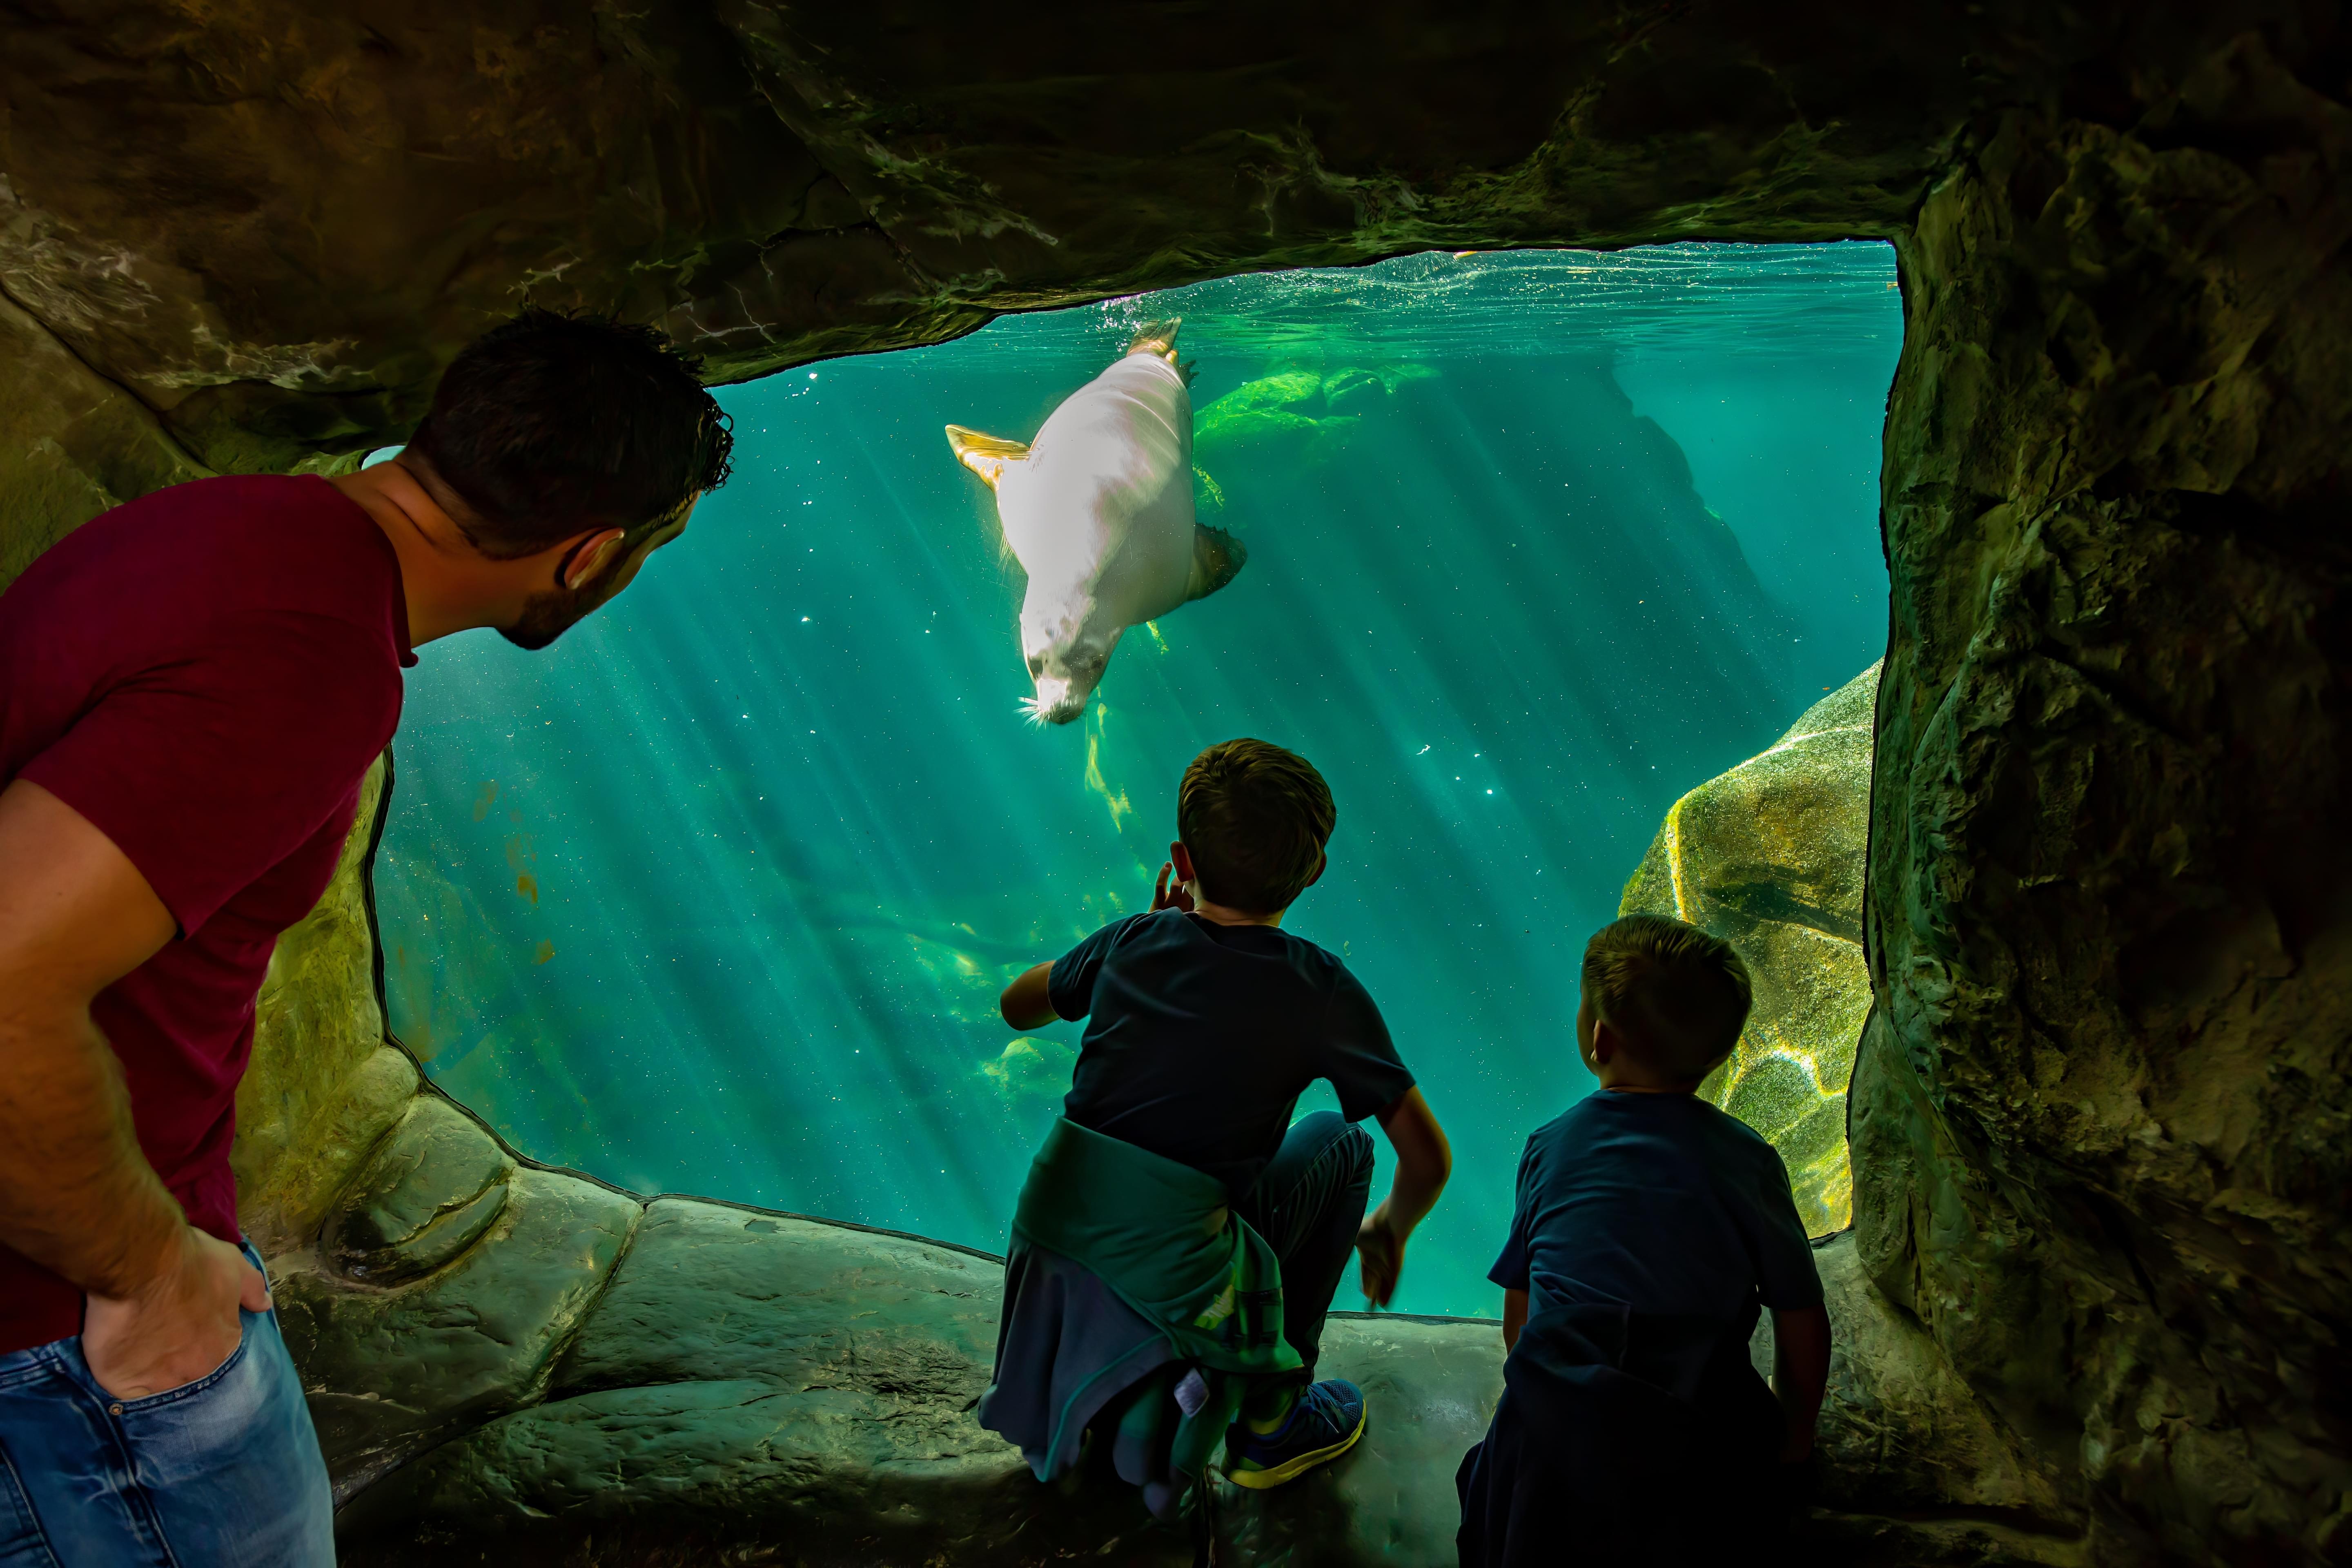 Newport Aquarium